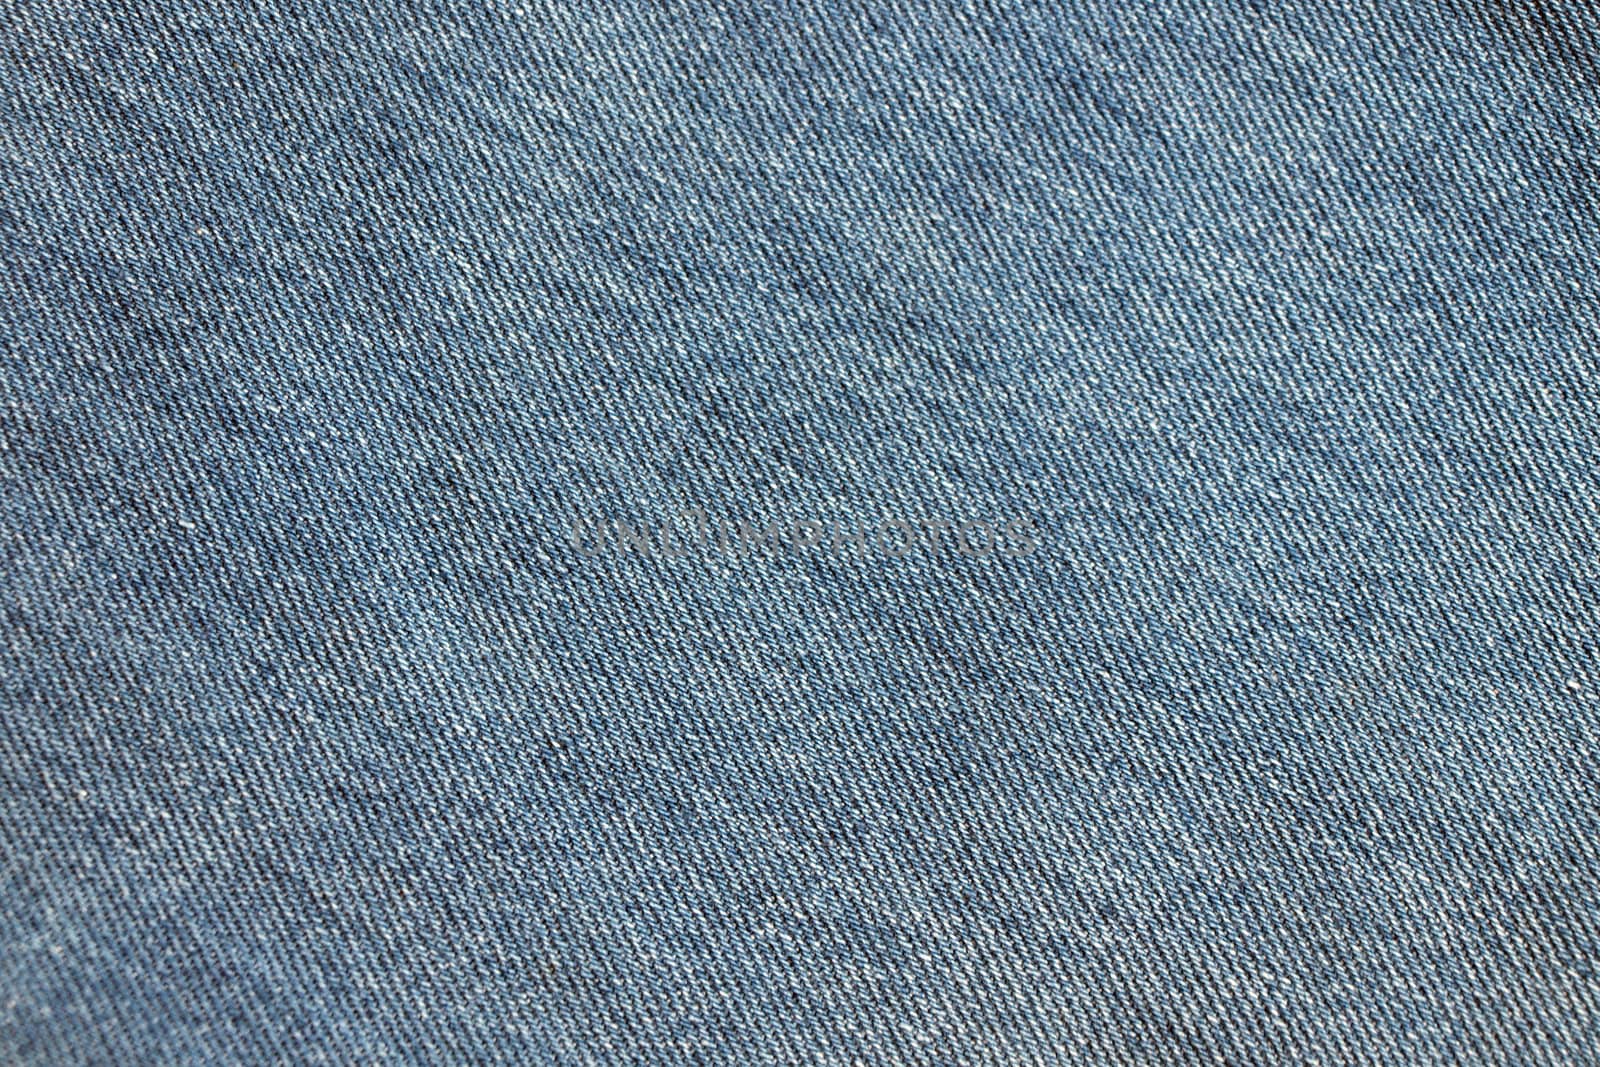  denim jeans texture, background by jakgree